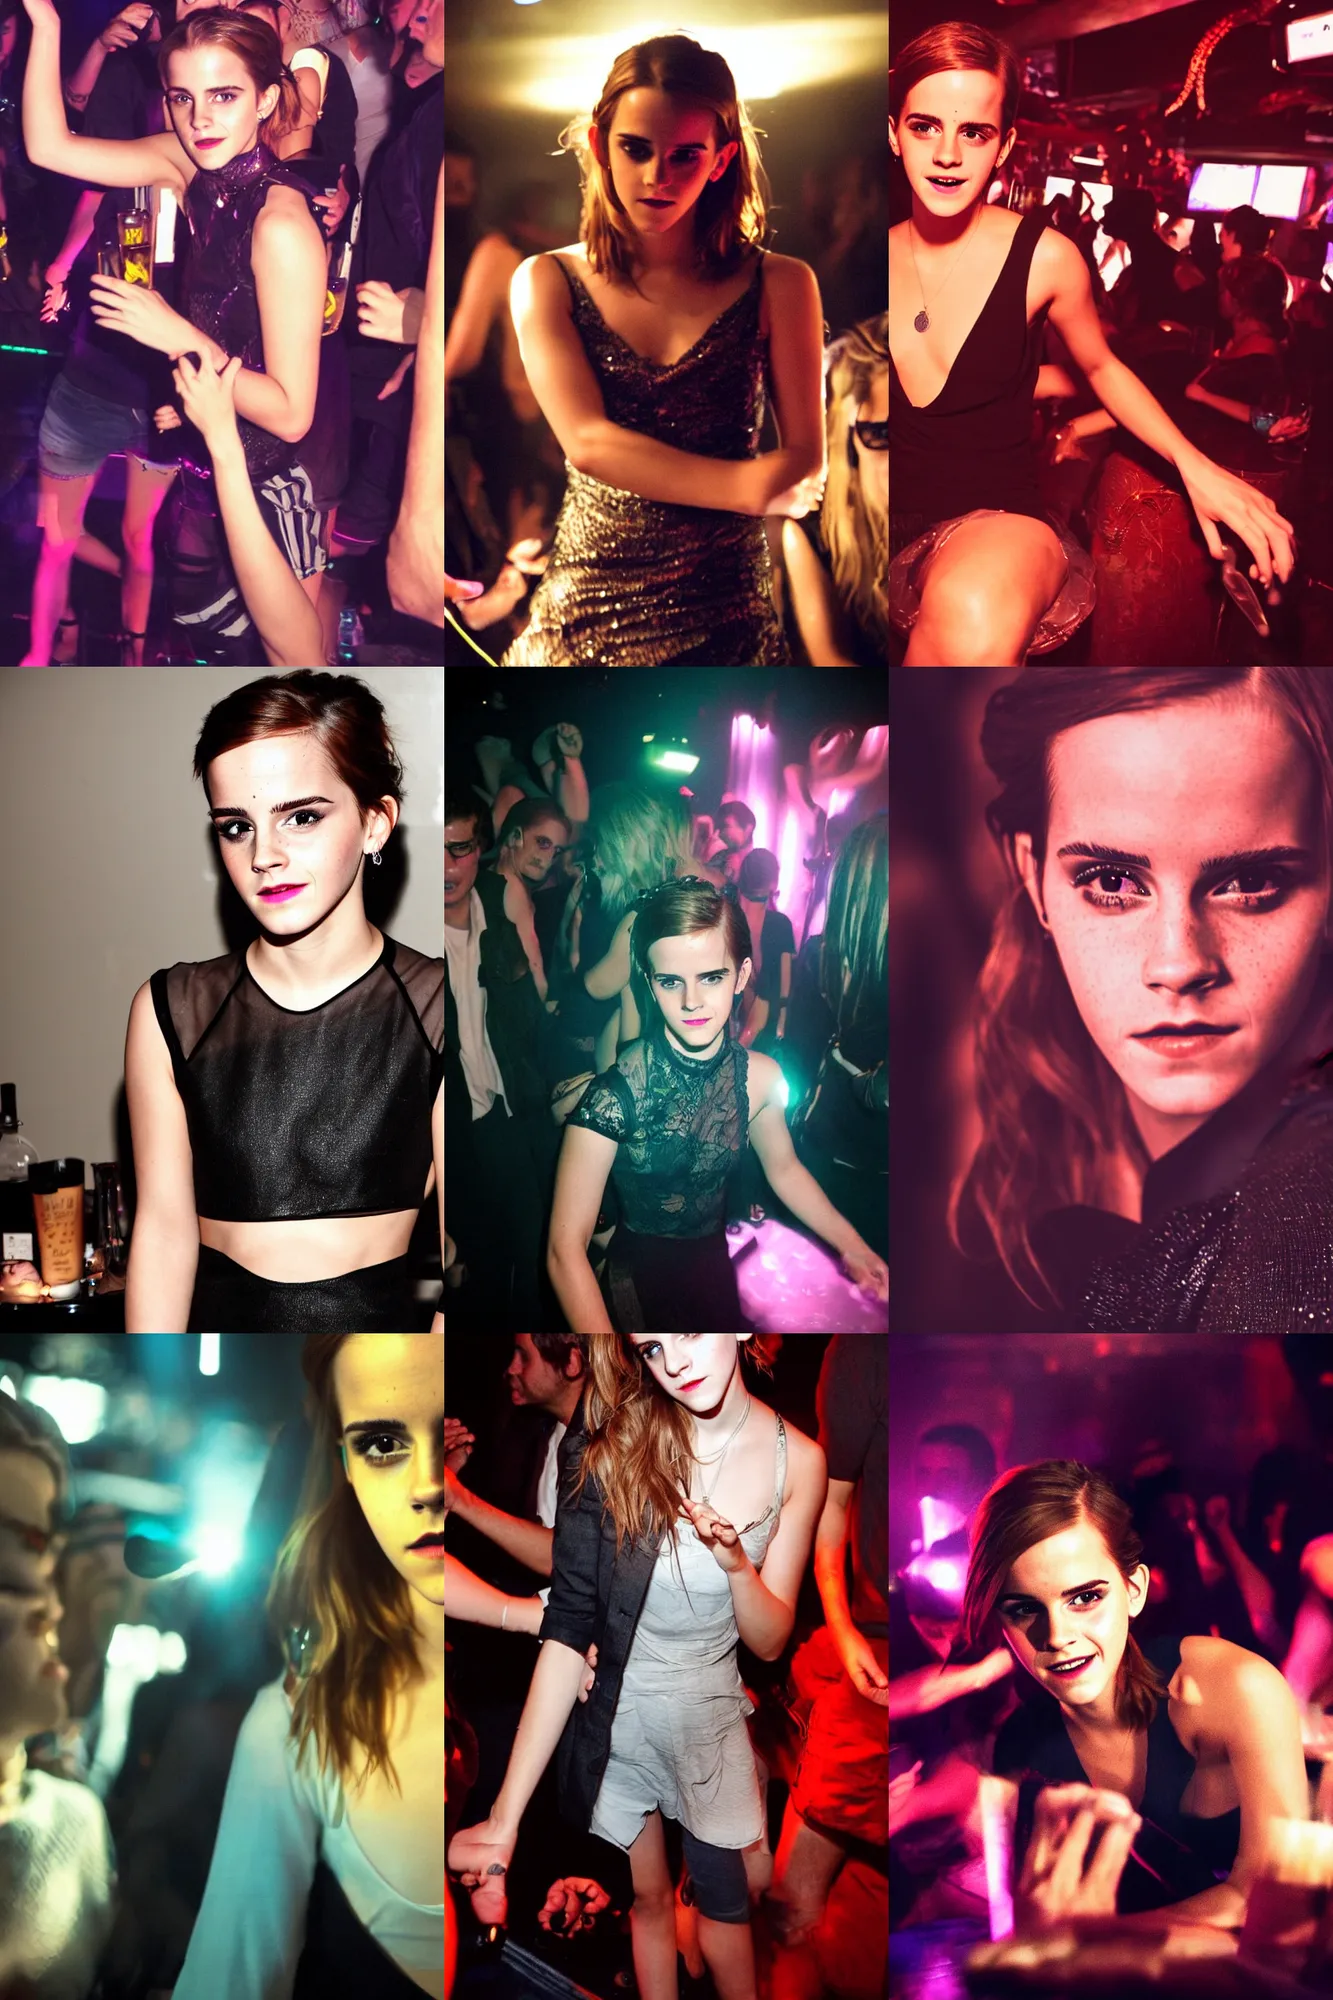 Prompt: A photo of Emma Watson drunk partying in the nightclub. Cyberpunk lighting.